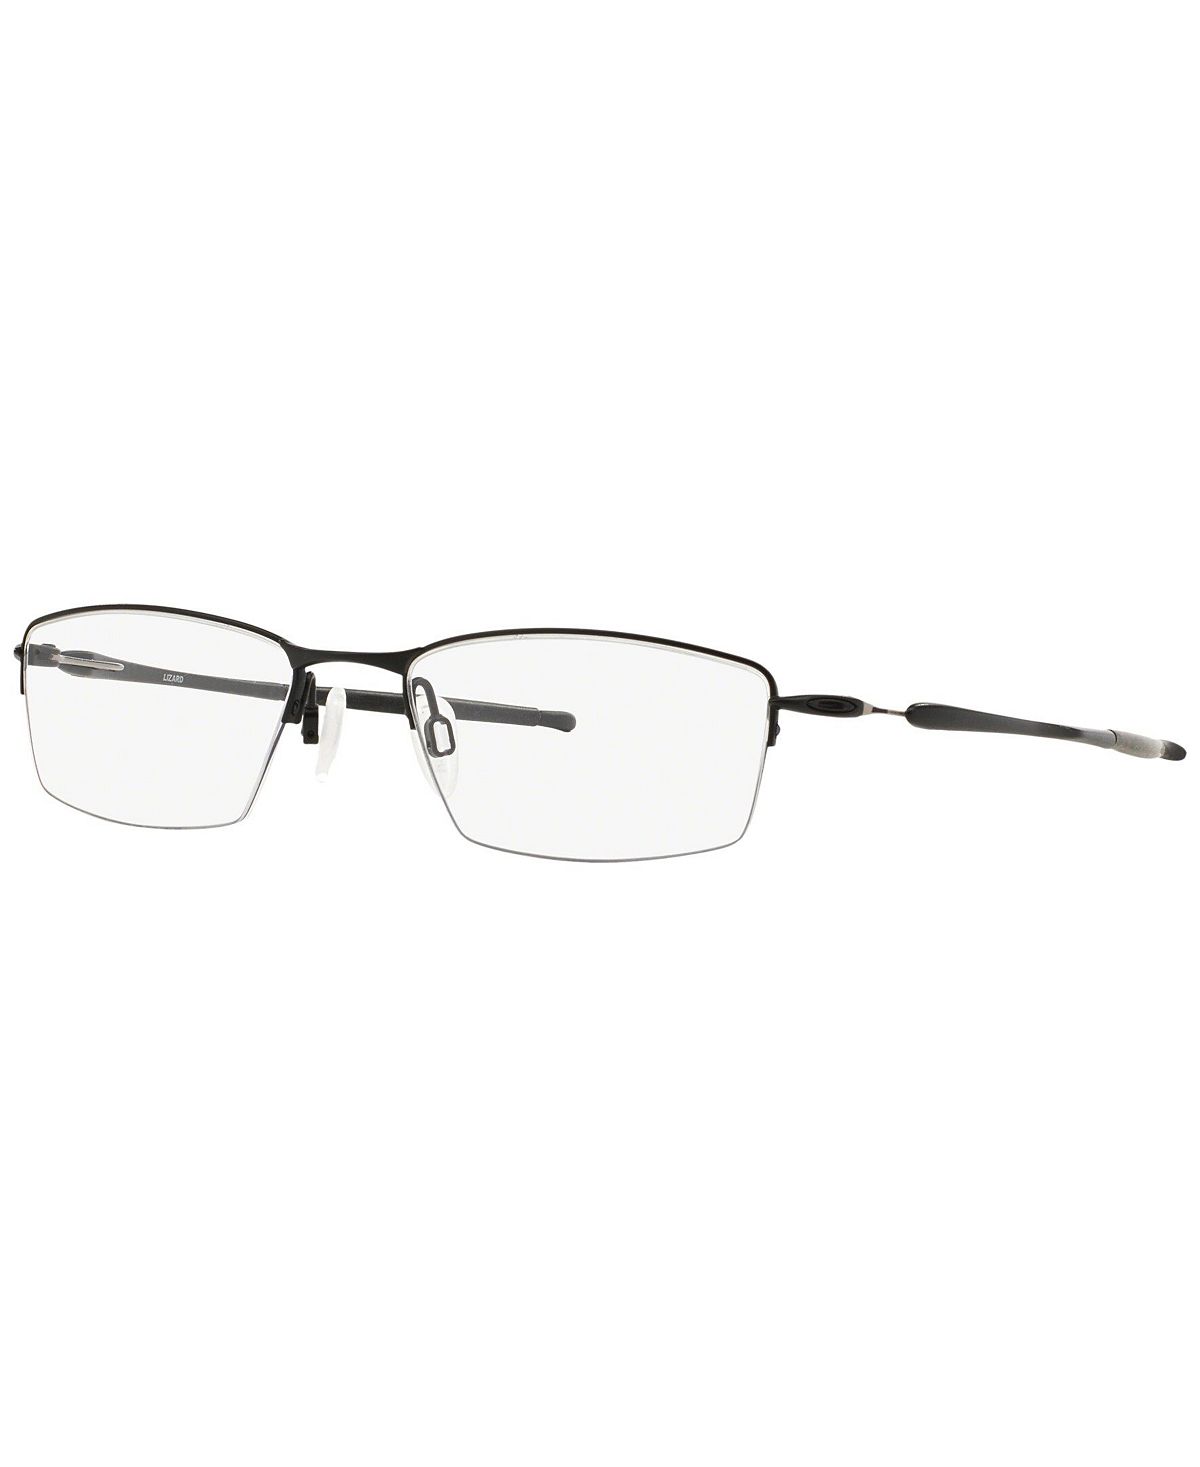 OX5113 Мужские прямоугольные очки Lizard Oakley пульт к samsung mf59 00215a box sat rc9500